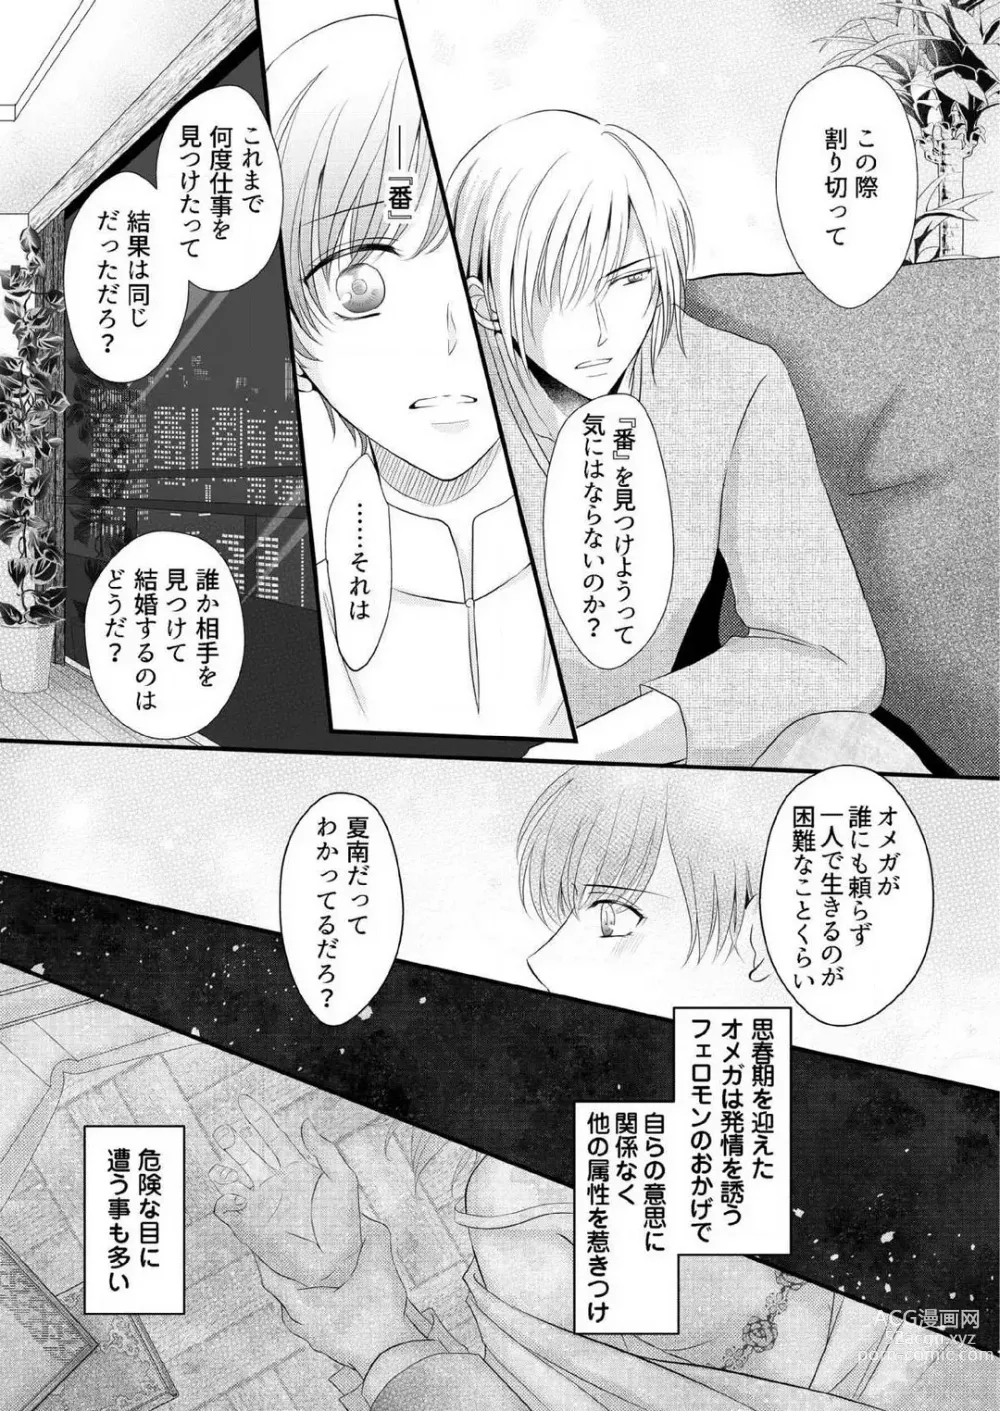 Page 8 of manga Renai Chocola